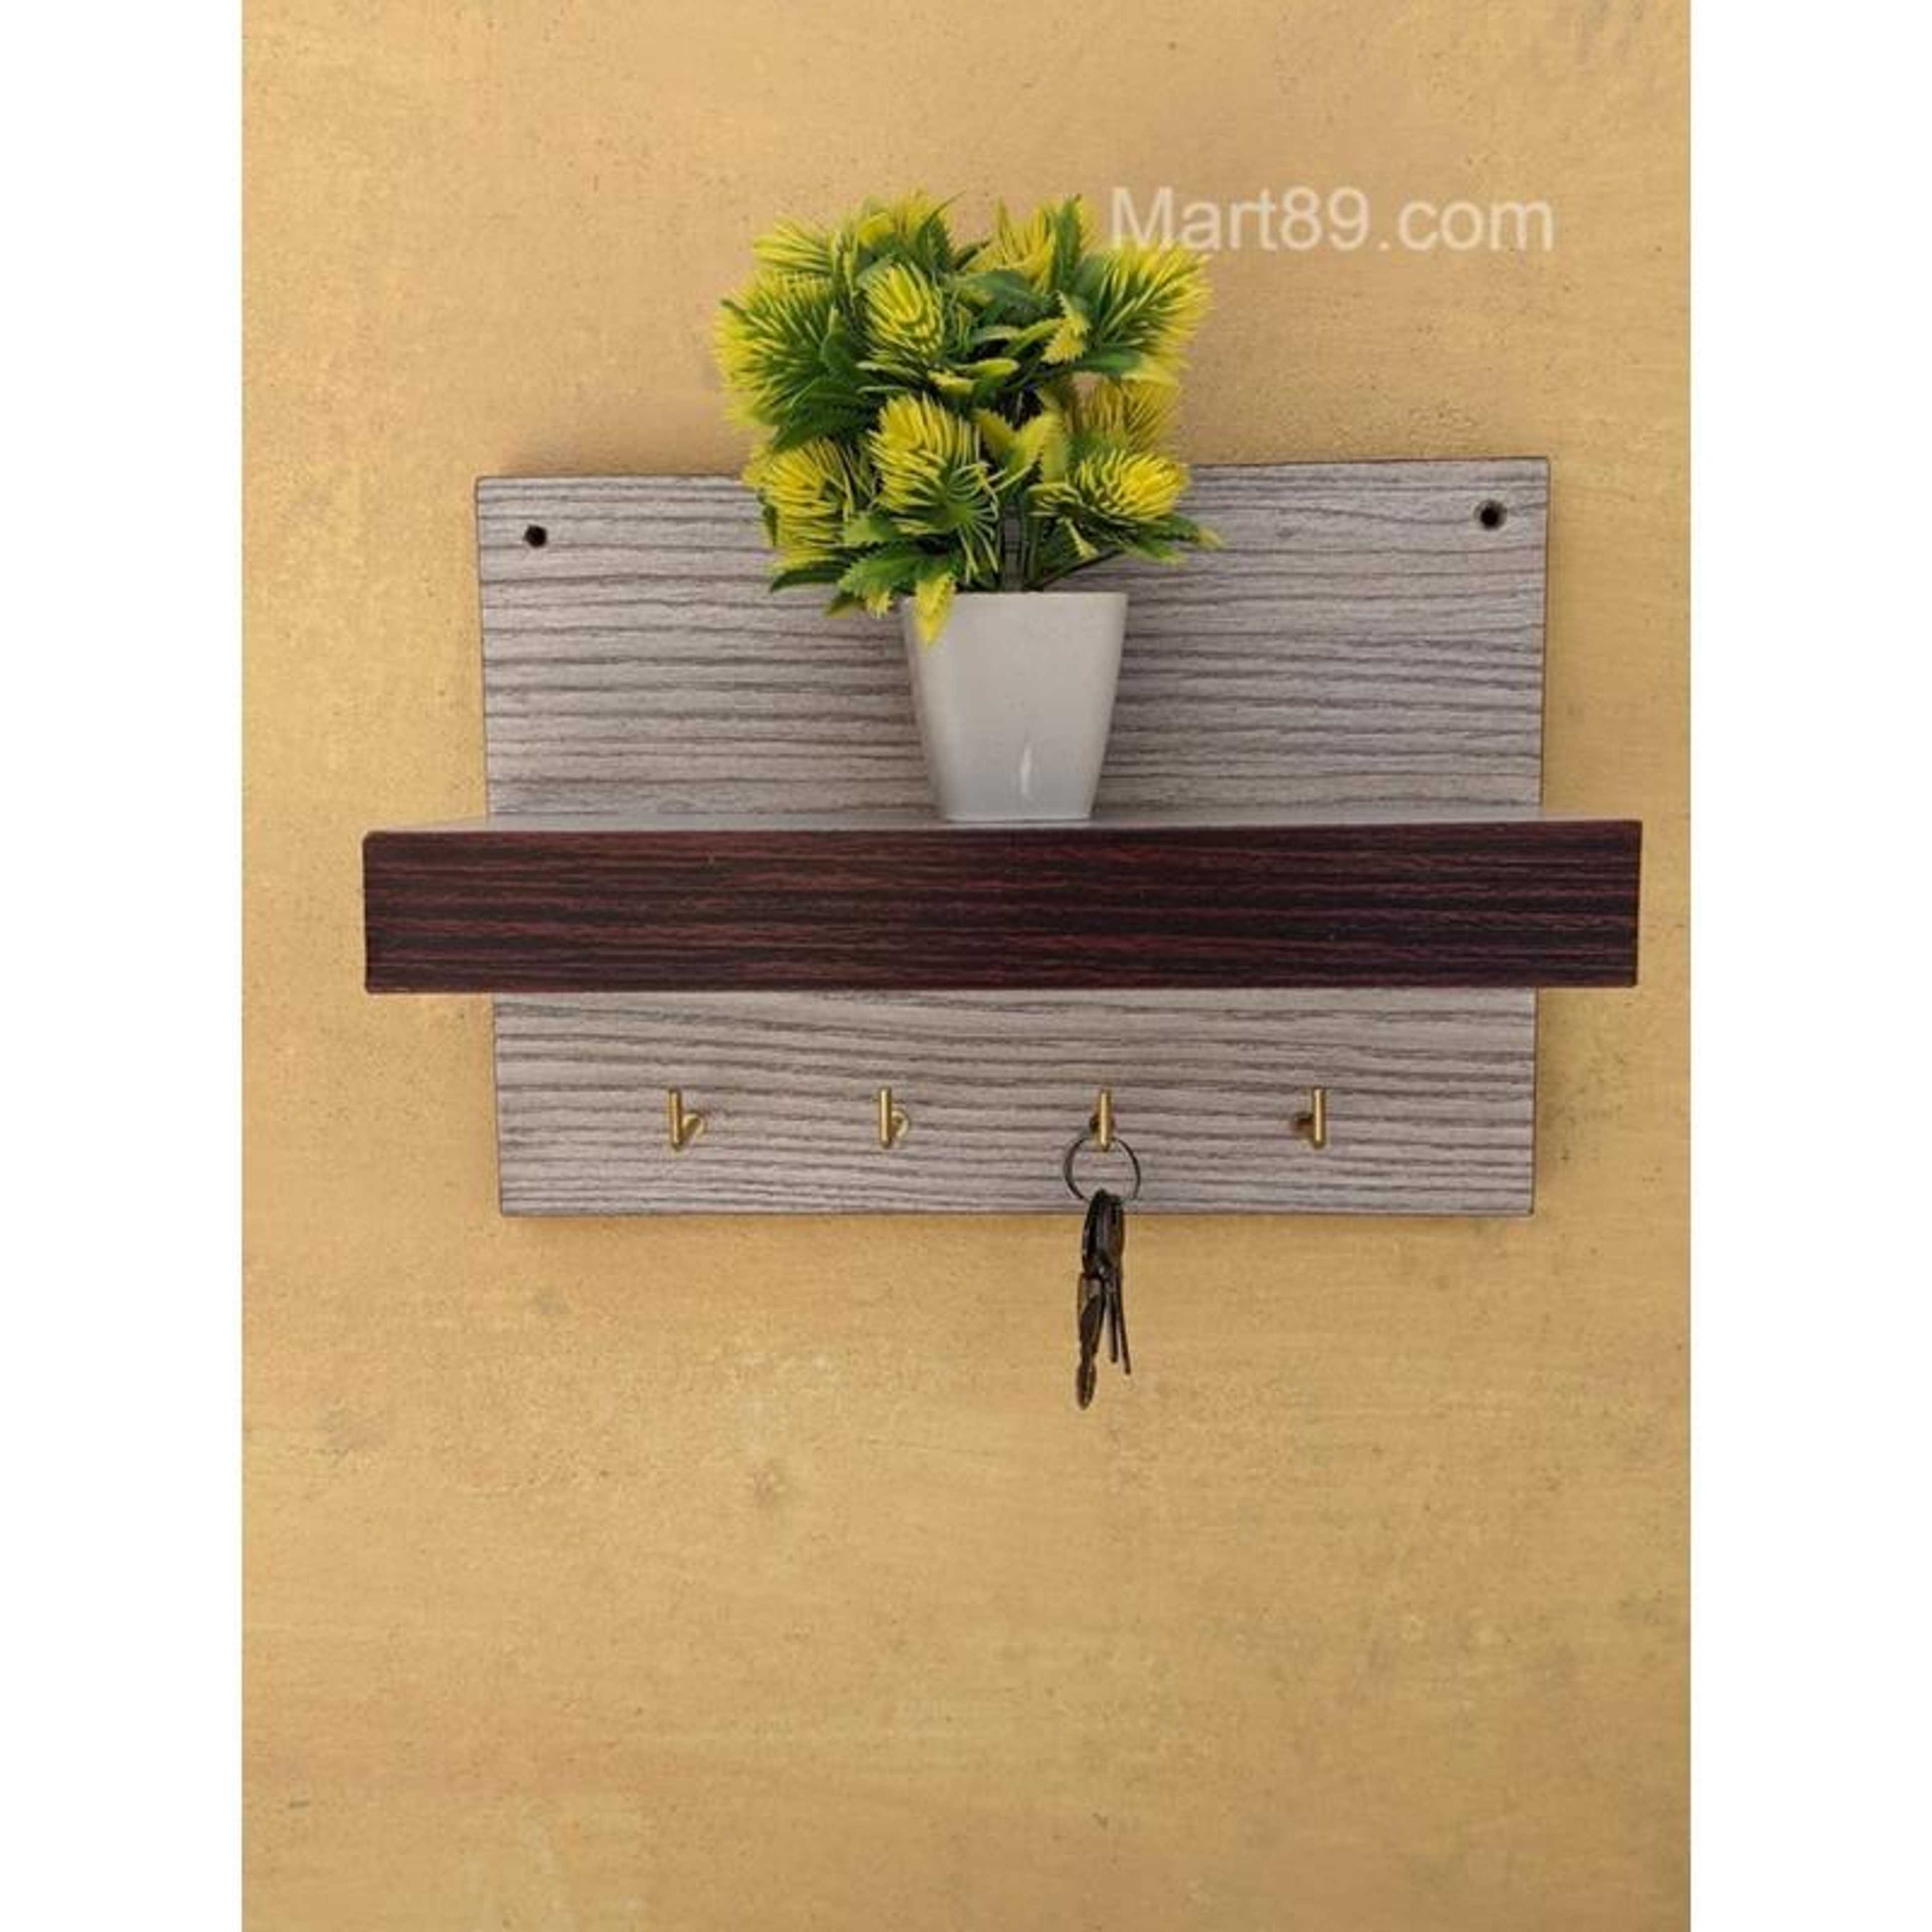 Cheap Price Key Holder Wall Hanger for Hanging Keys & Key Chains Best Key Holder for Home furniture